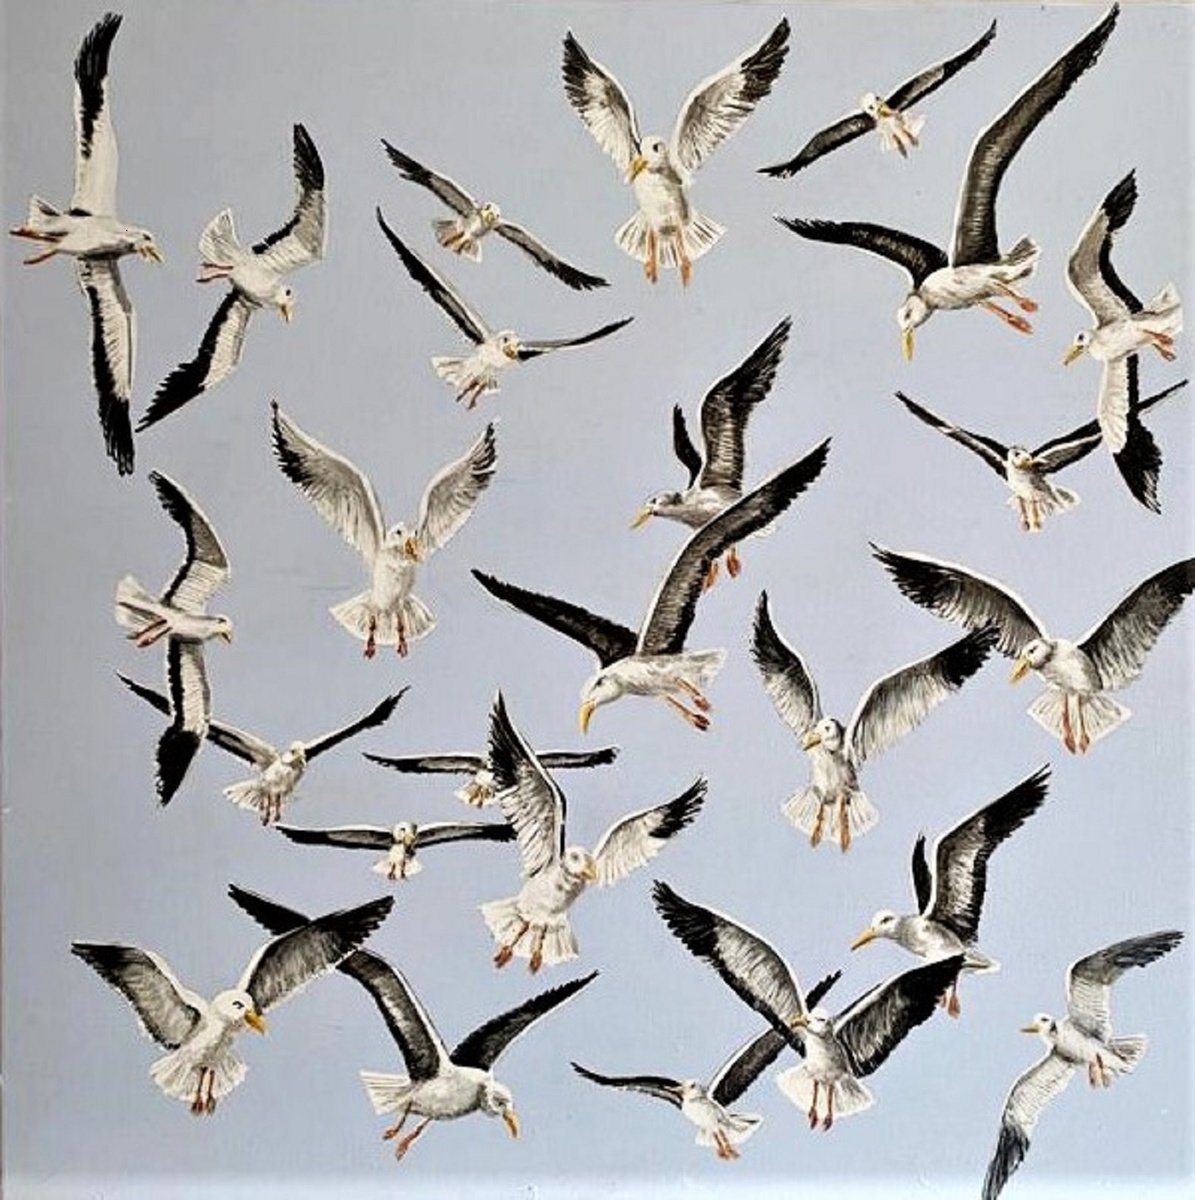 Gull Maelstrom by Laurence Wheeler